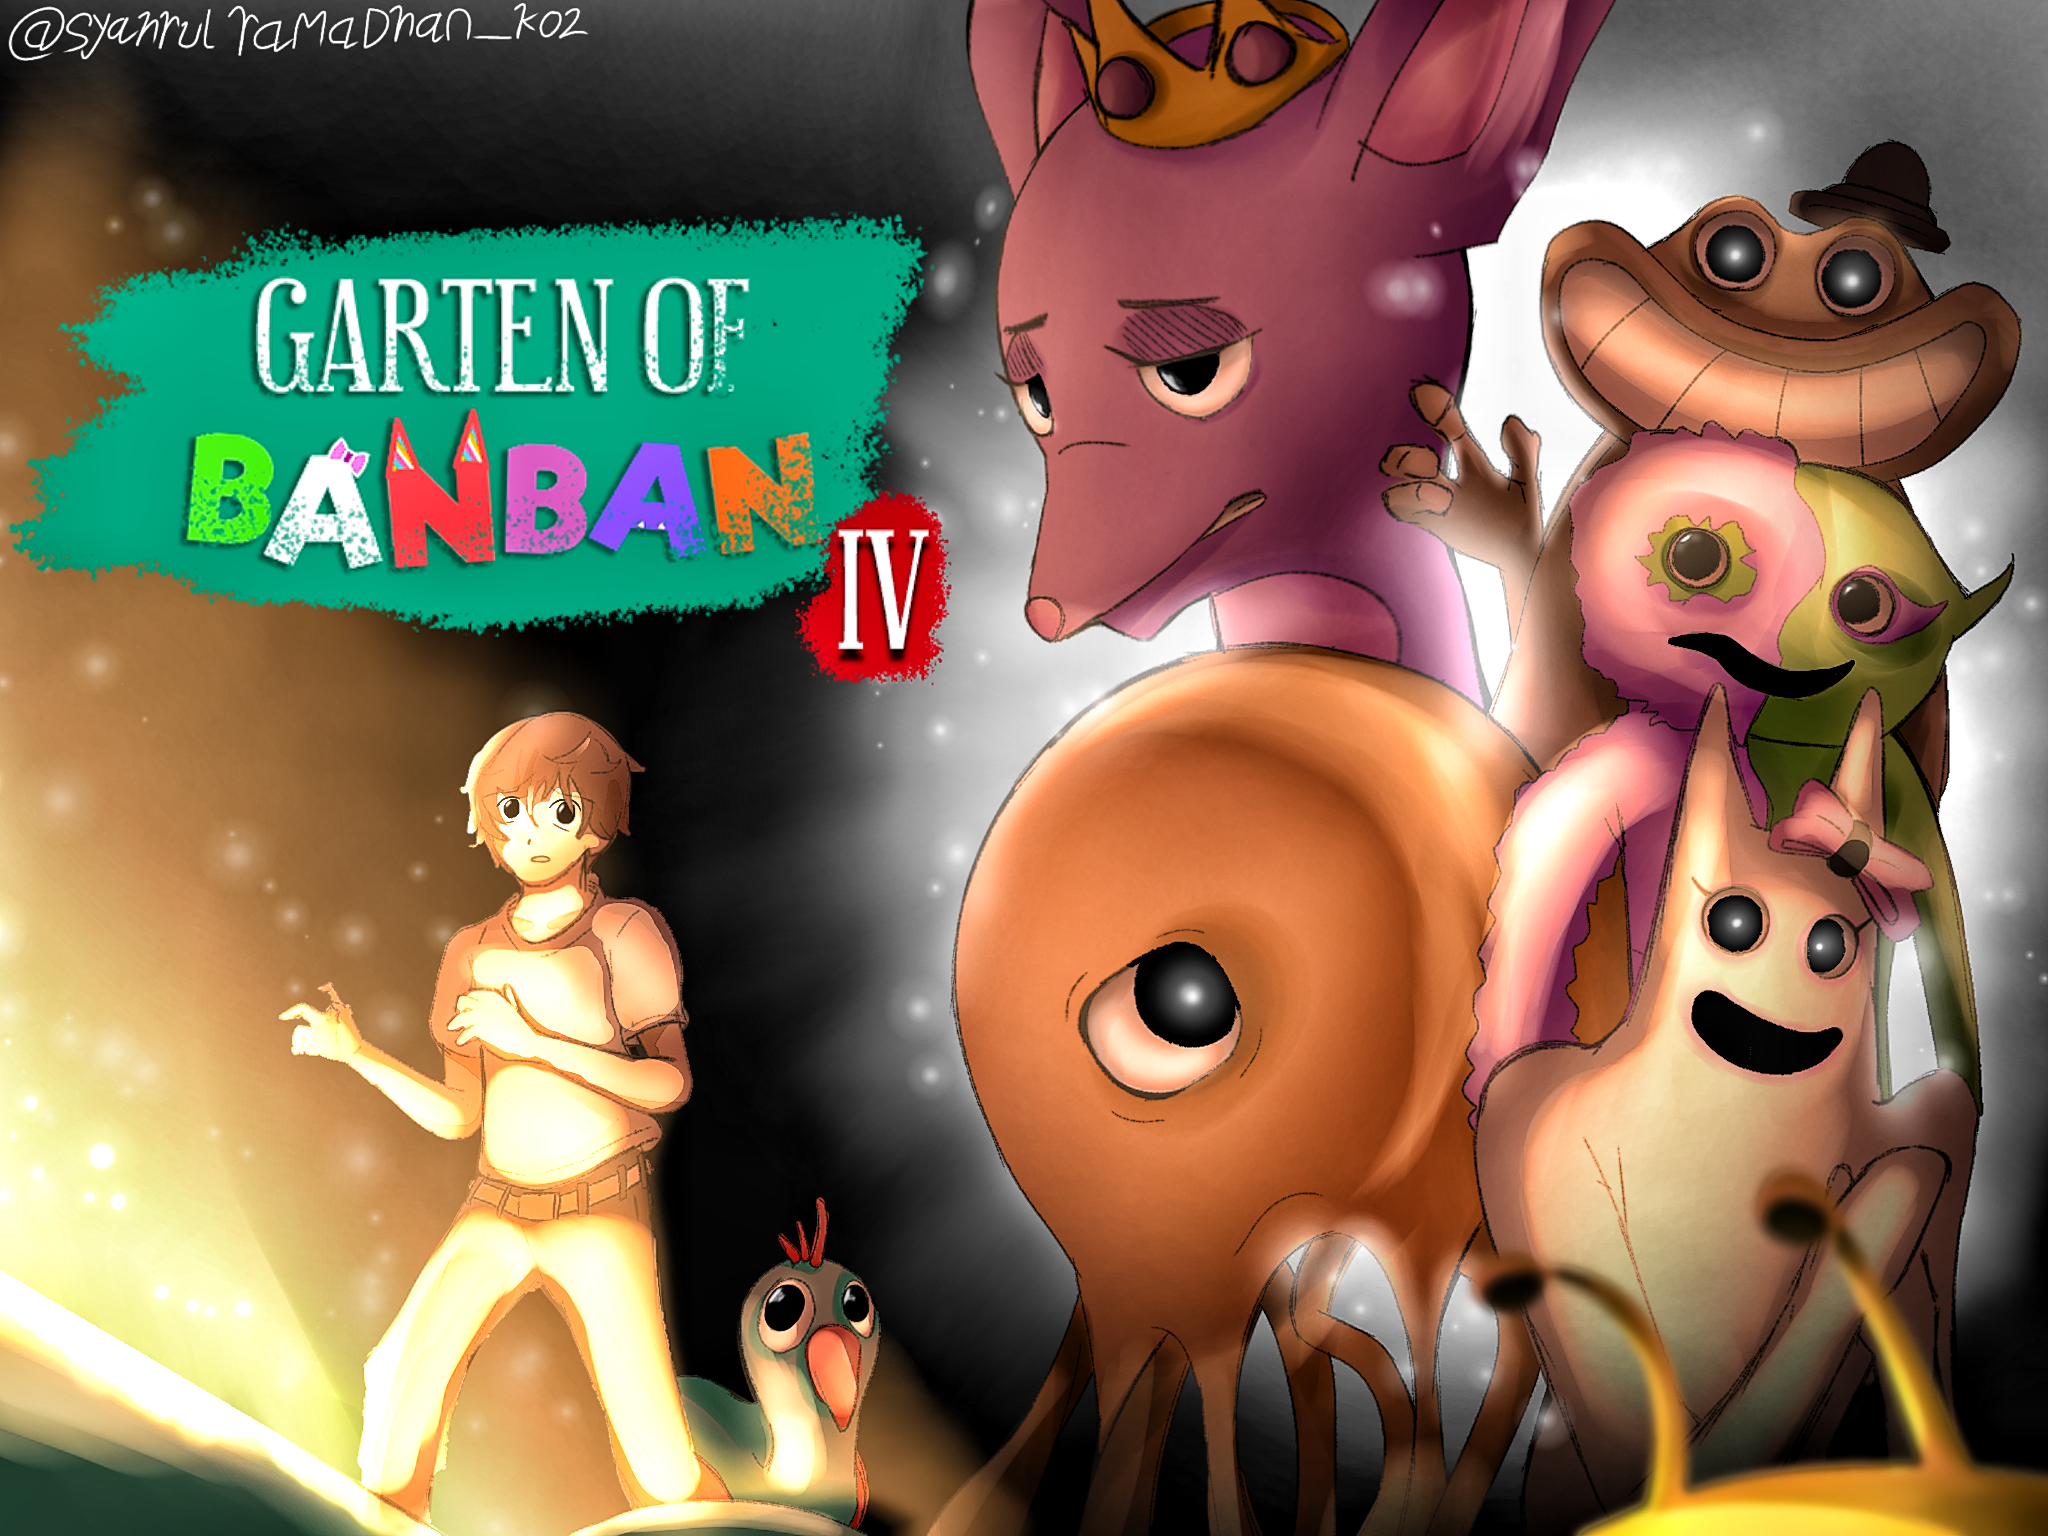 Garten of banban by DoorsALLlife on DeviantArt